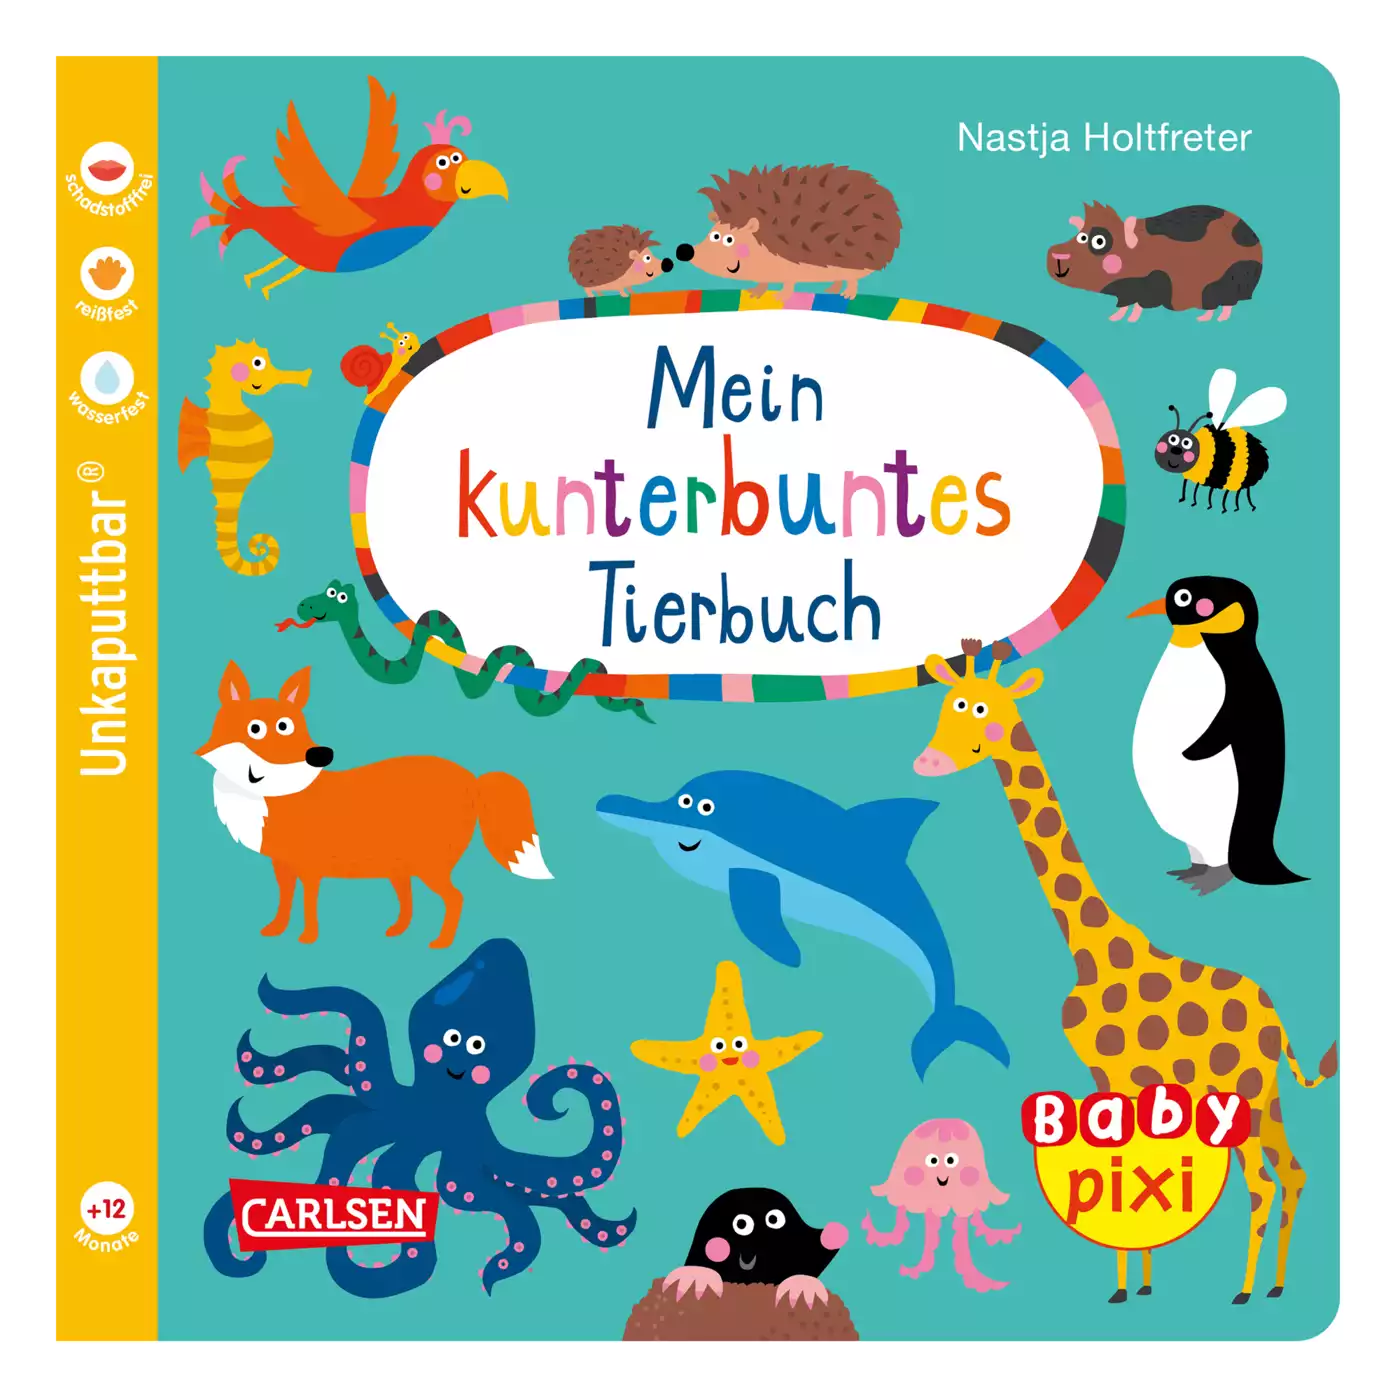 Baby Pixi - Mein kunterbuntes Tierbuch CARLSEN 2000574201955 1